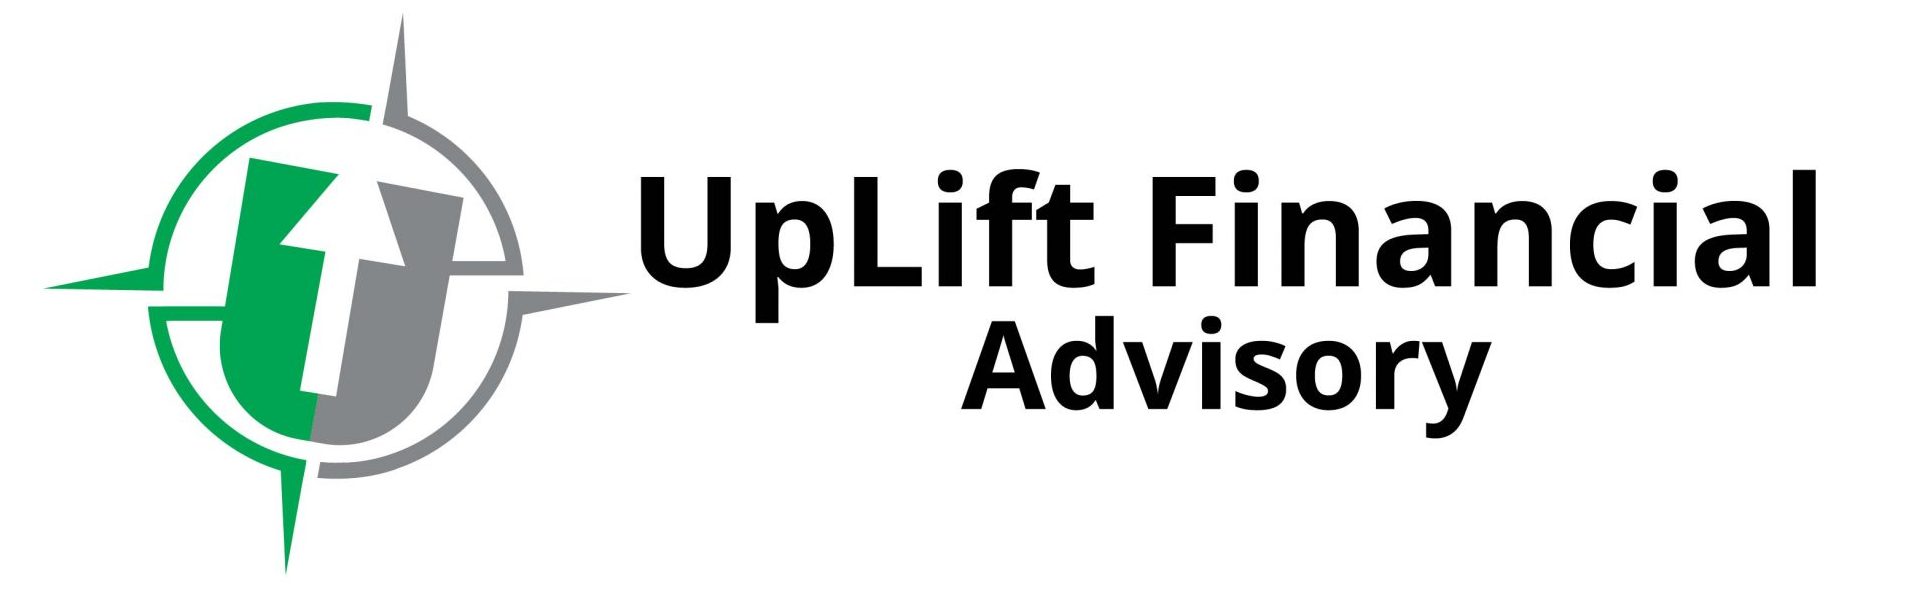 UpLift Financial Advisory